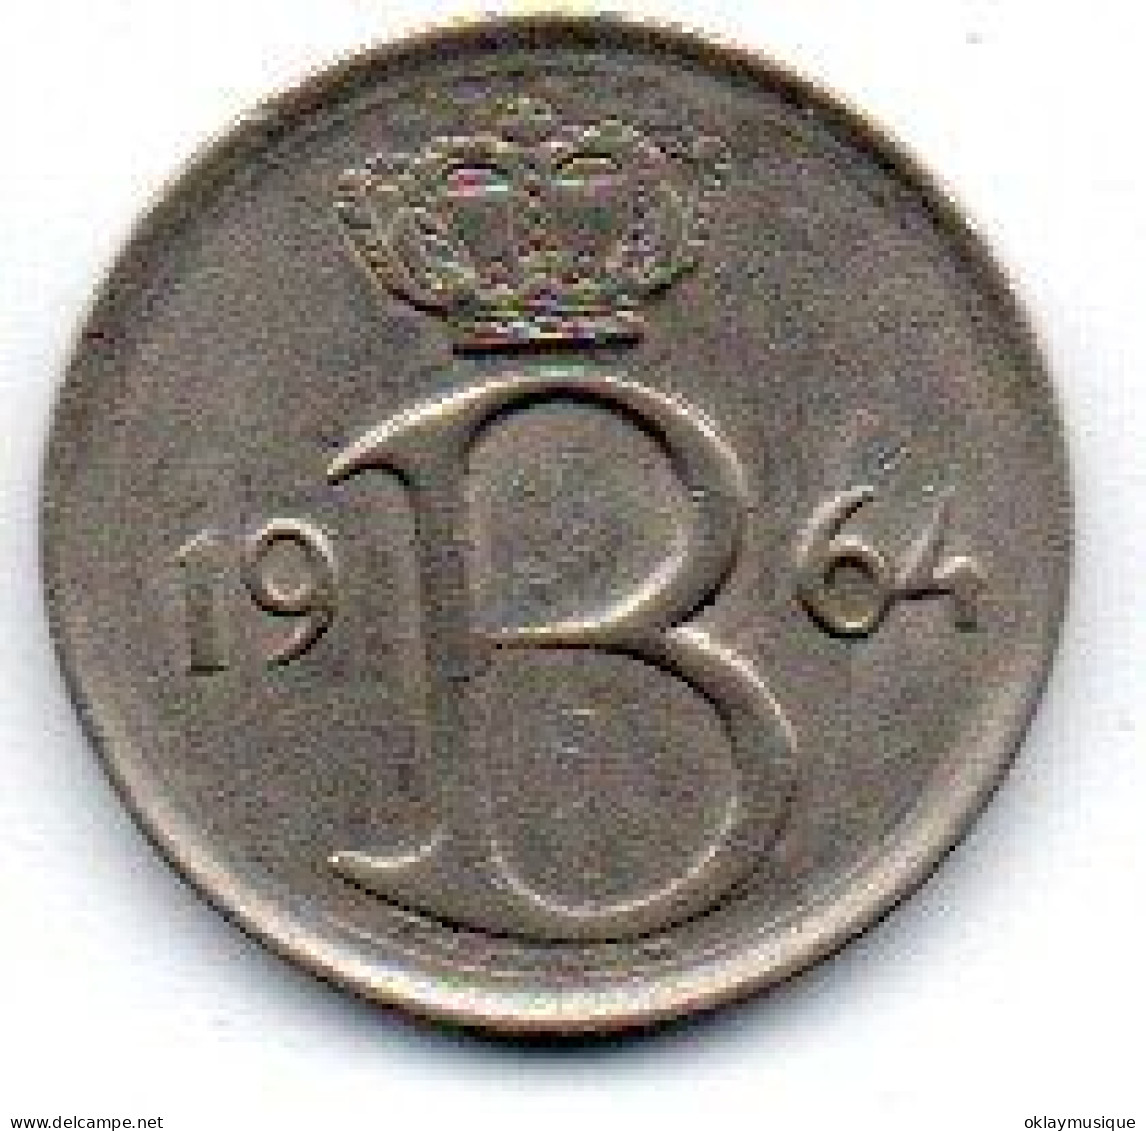 25 Centimes 1964 - 25 Cent